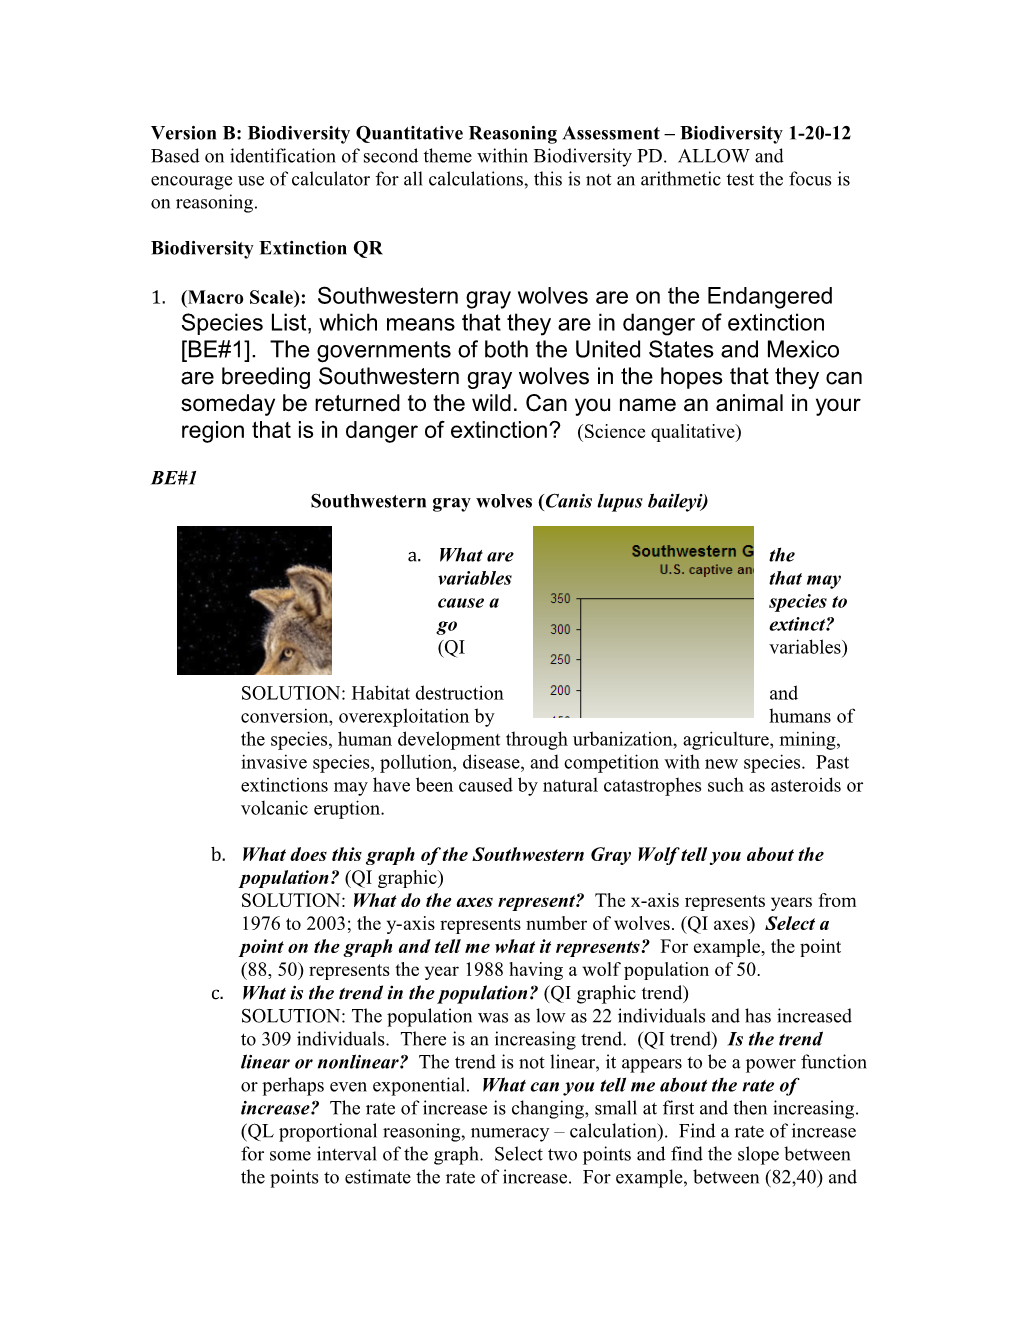 Version B: Biodiversity Quantitative Reasoning Assessment Biodiversity 1-20-12